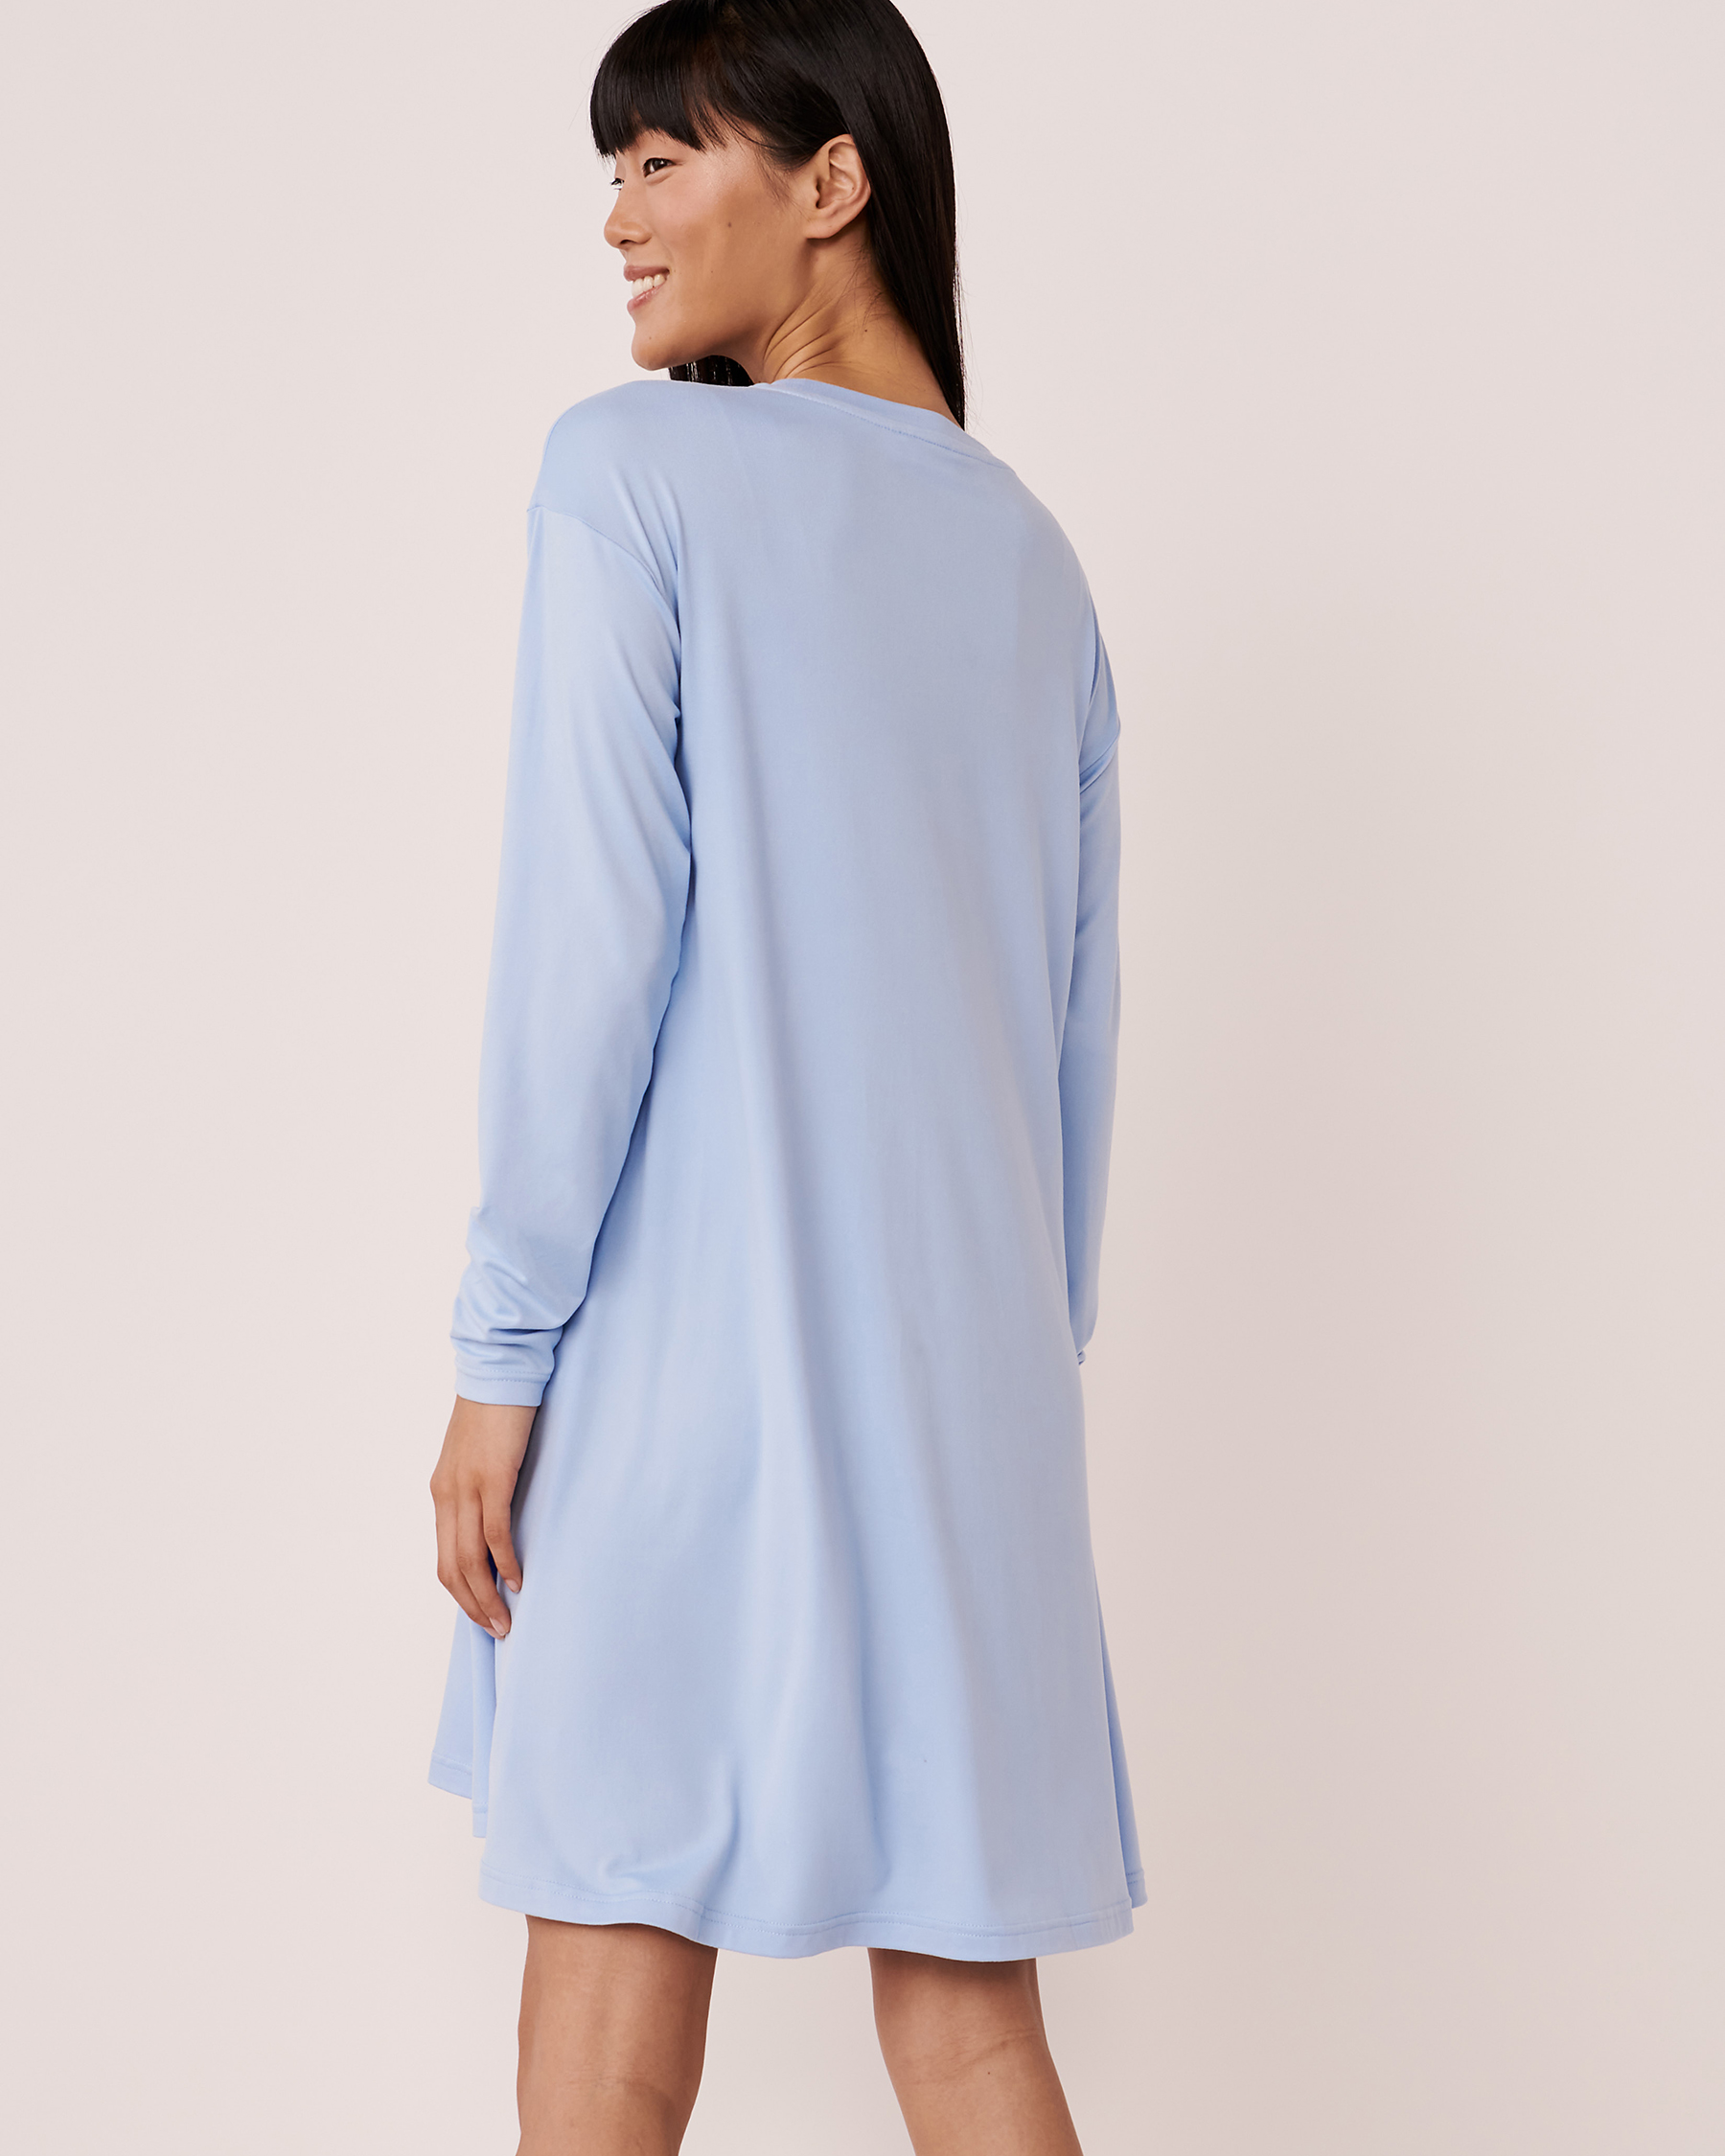 LA VIE EN ROSE Super Soft Long Sleeve Sleepshirt Deep blue 40500239 - View3